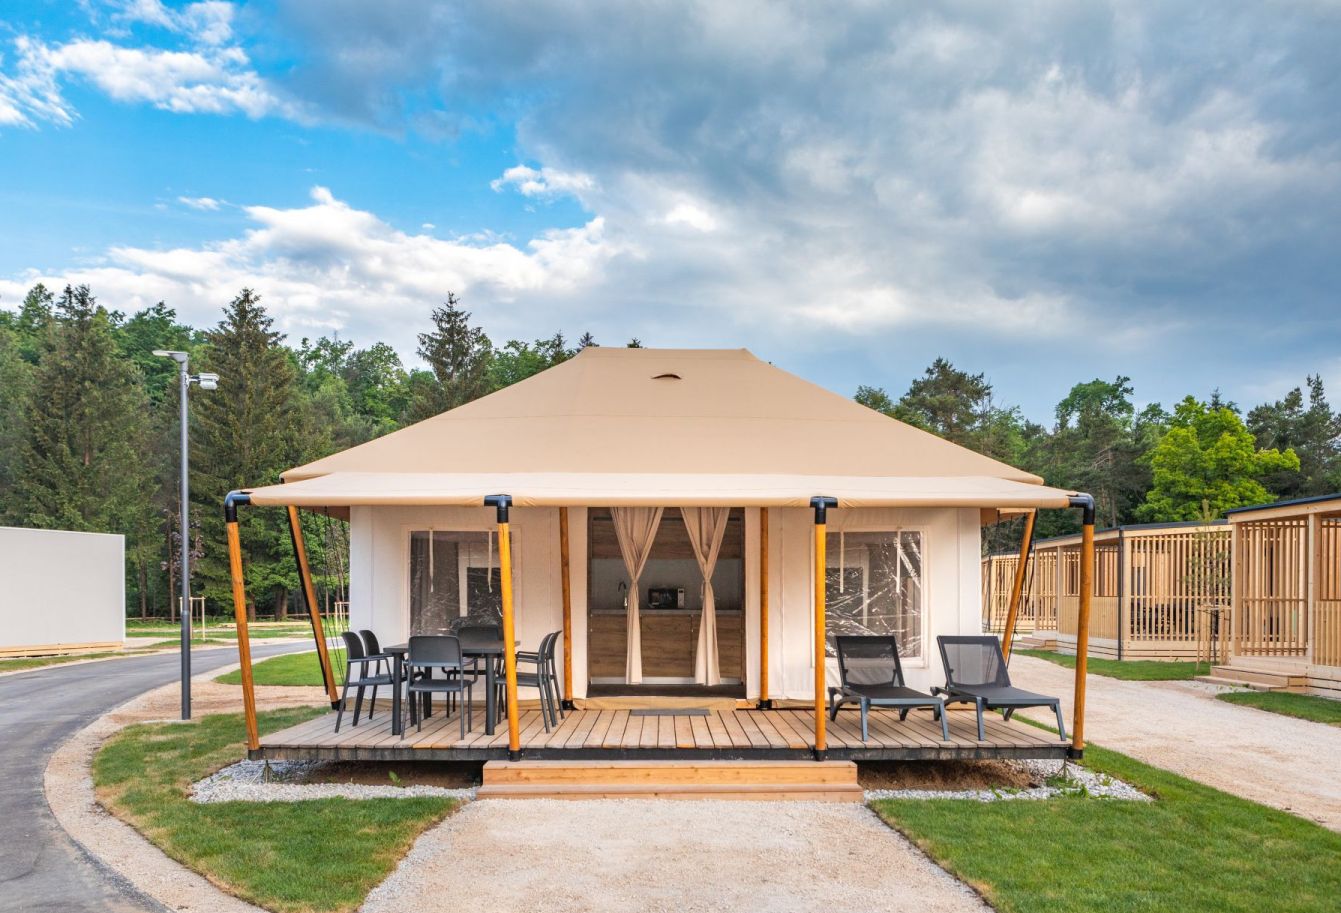 Типи шатор дрвени стуб за глампинг сафари шатор луксузни шатор за венчање на отвореном (2)(1)